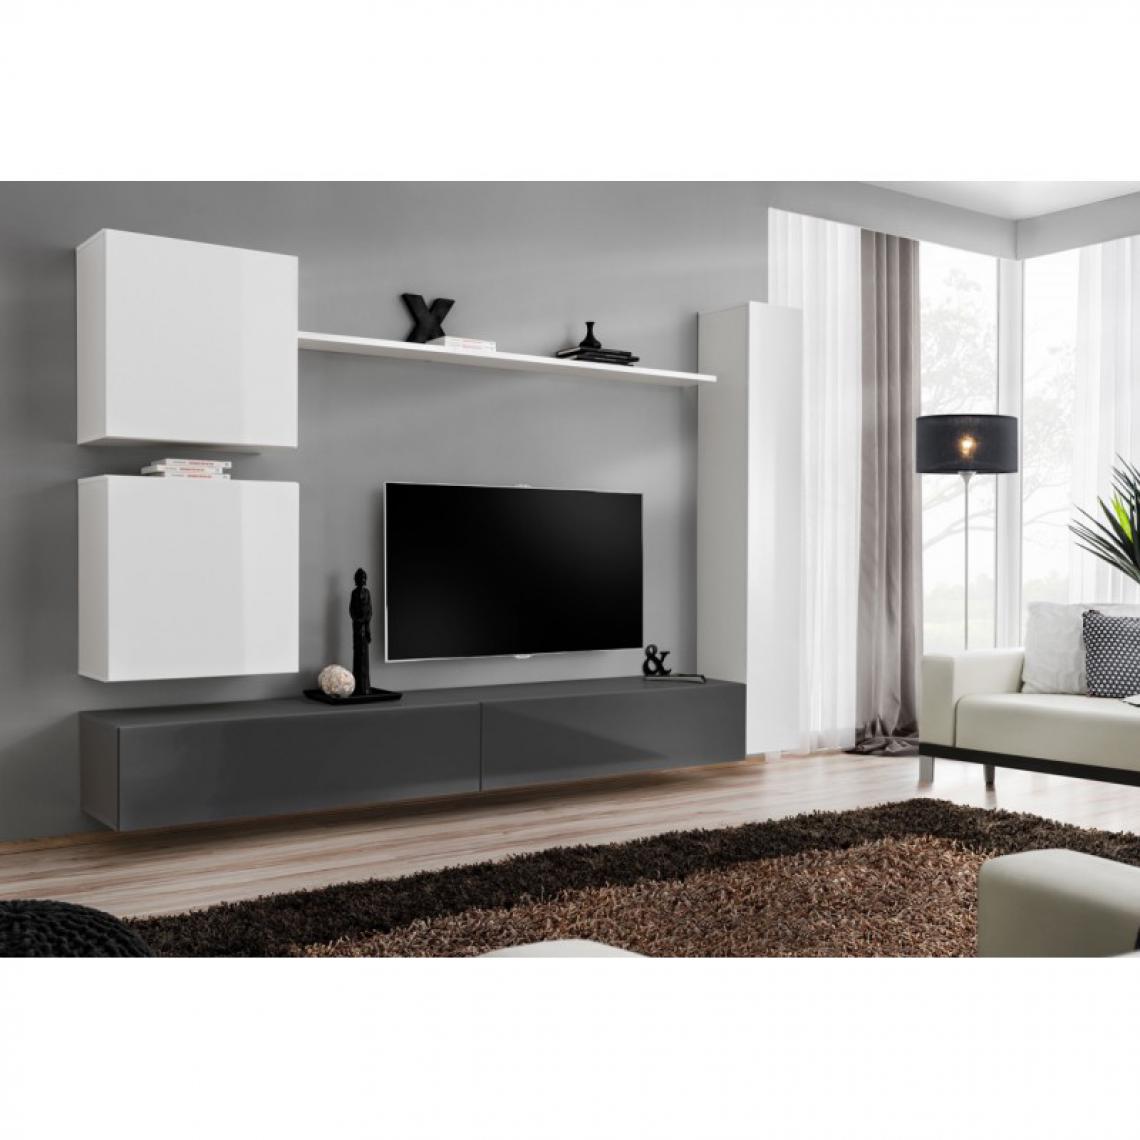 Ac-Deco - Meuble TV Mural Design Switch VIII 280cm Blanc & Gris - Meubles TV, Hi-Fi